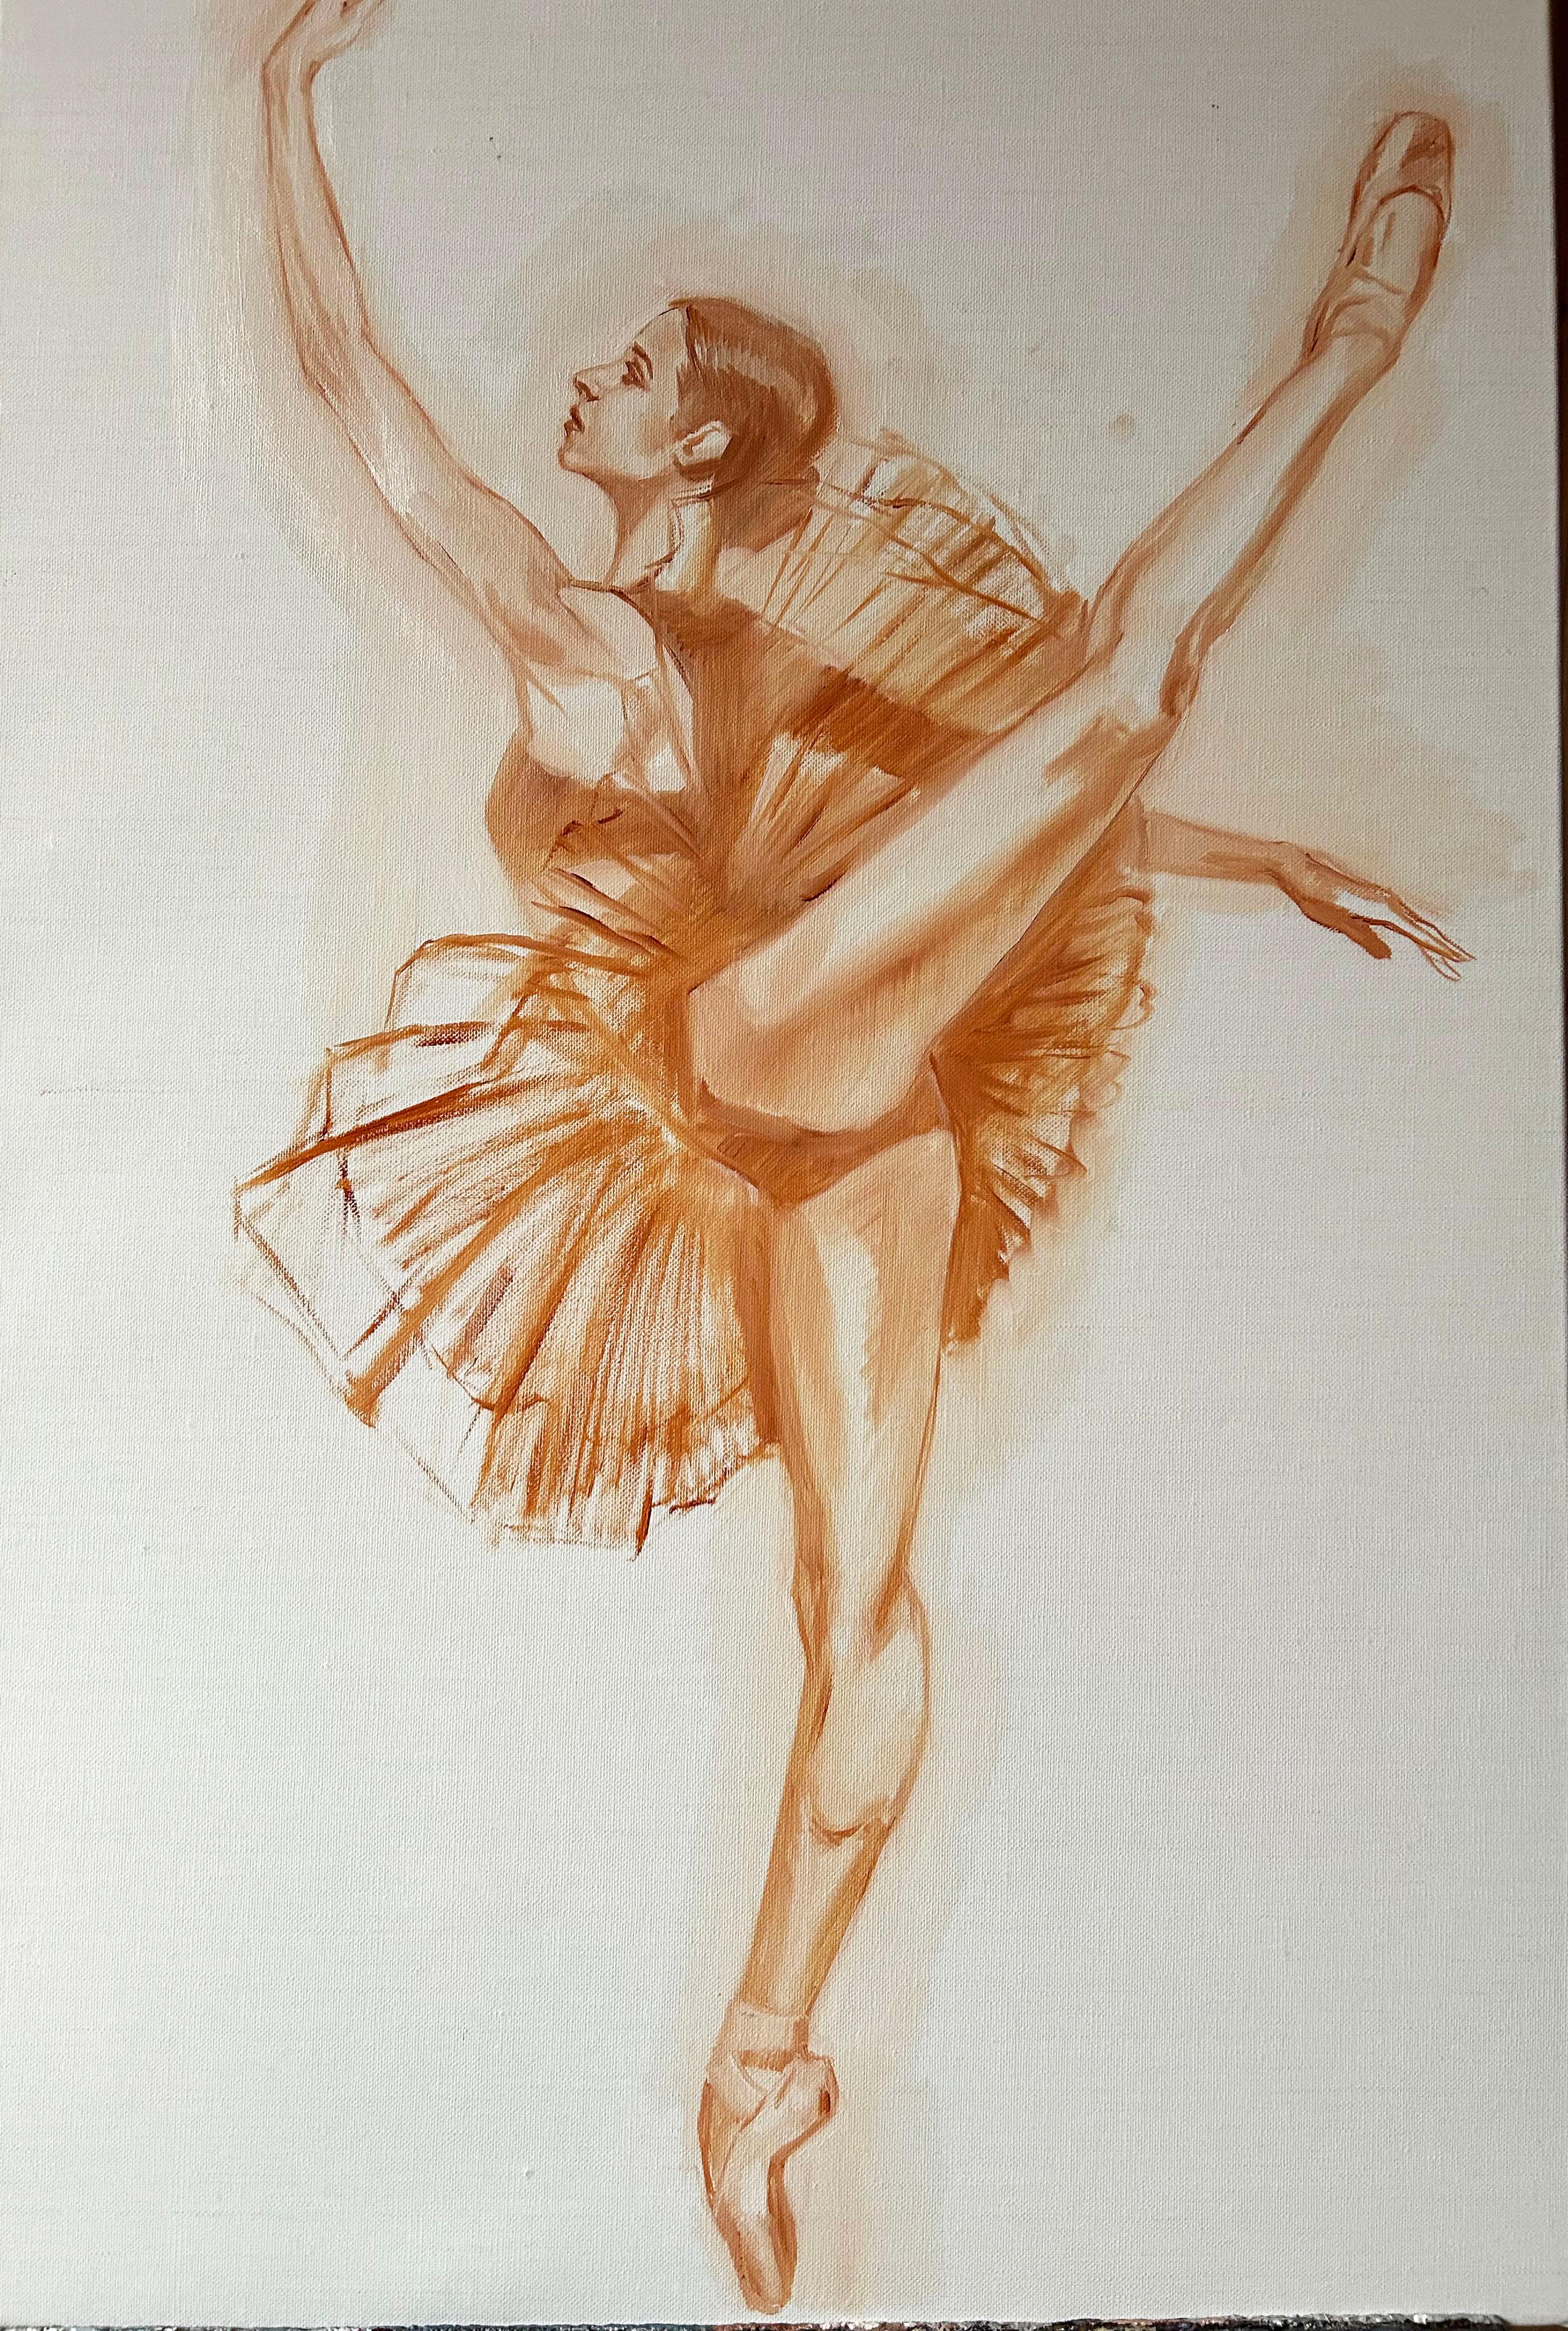 The beauty of dance XIII - American Realist Painting by Serghei Ghetiu